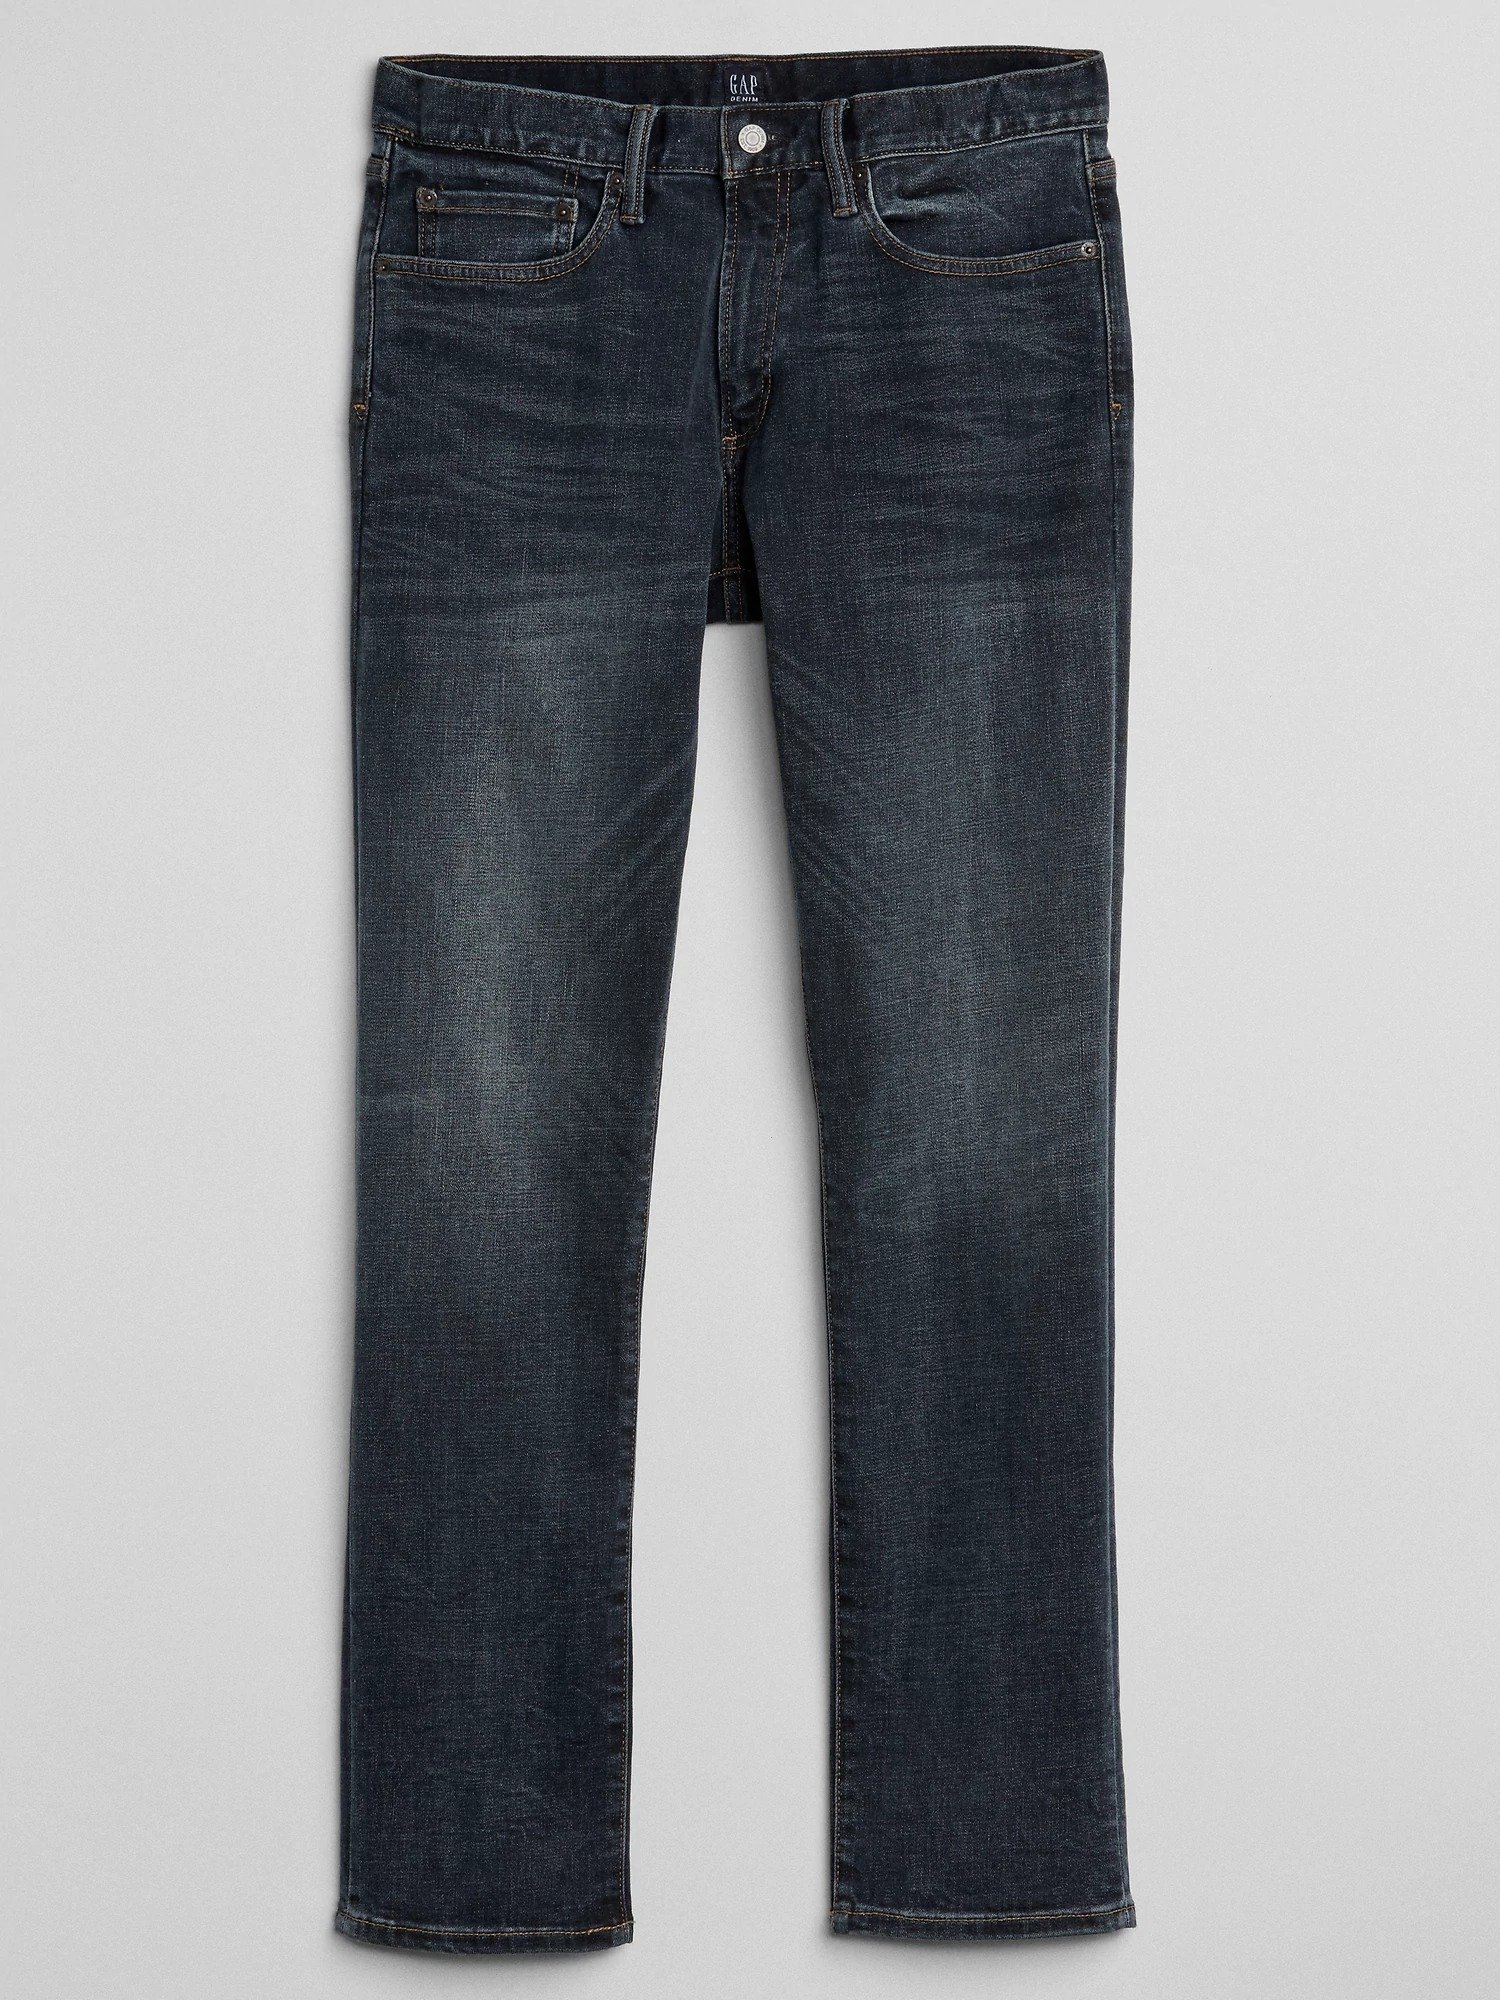 Washwell koyu indigo yıkamalı slim fit Gapflex jean pantolon product image